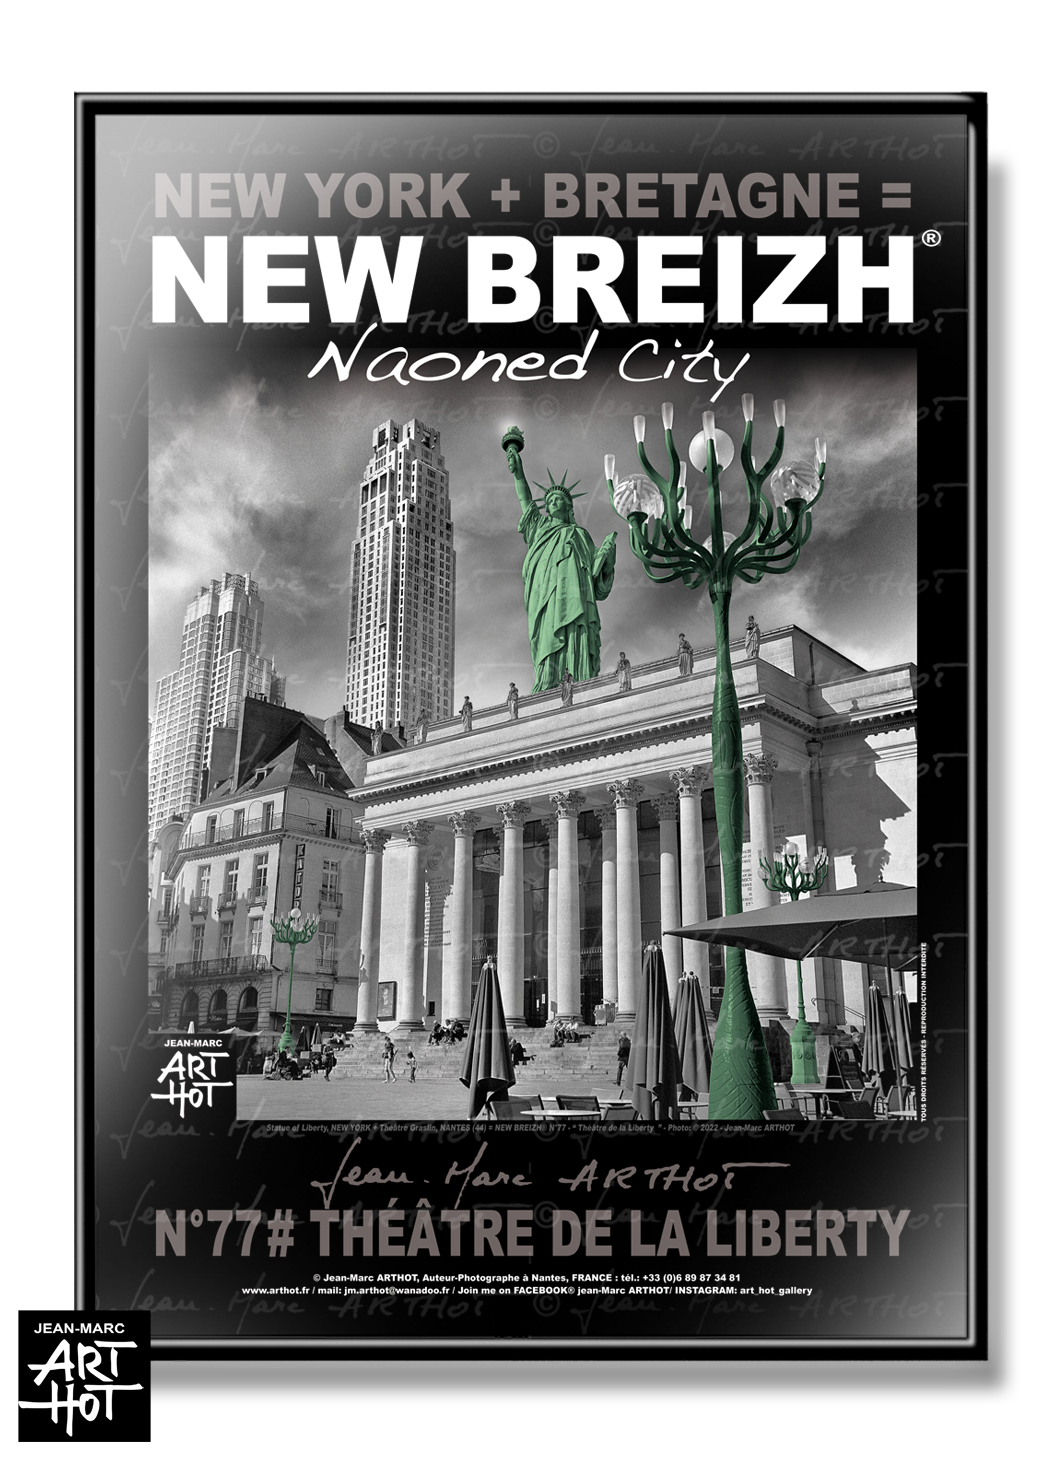 arthot-photo-art-b&amp;w-new-york-bretagne-newbreizh-077-loire-atlantique-44-nantes-theatre-graslin-buildings-COUL-AFFICHE